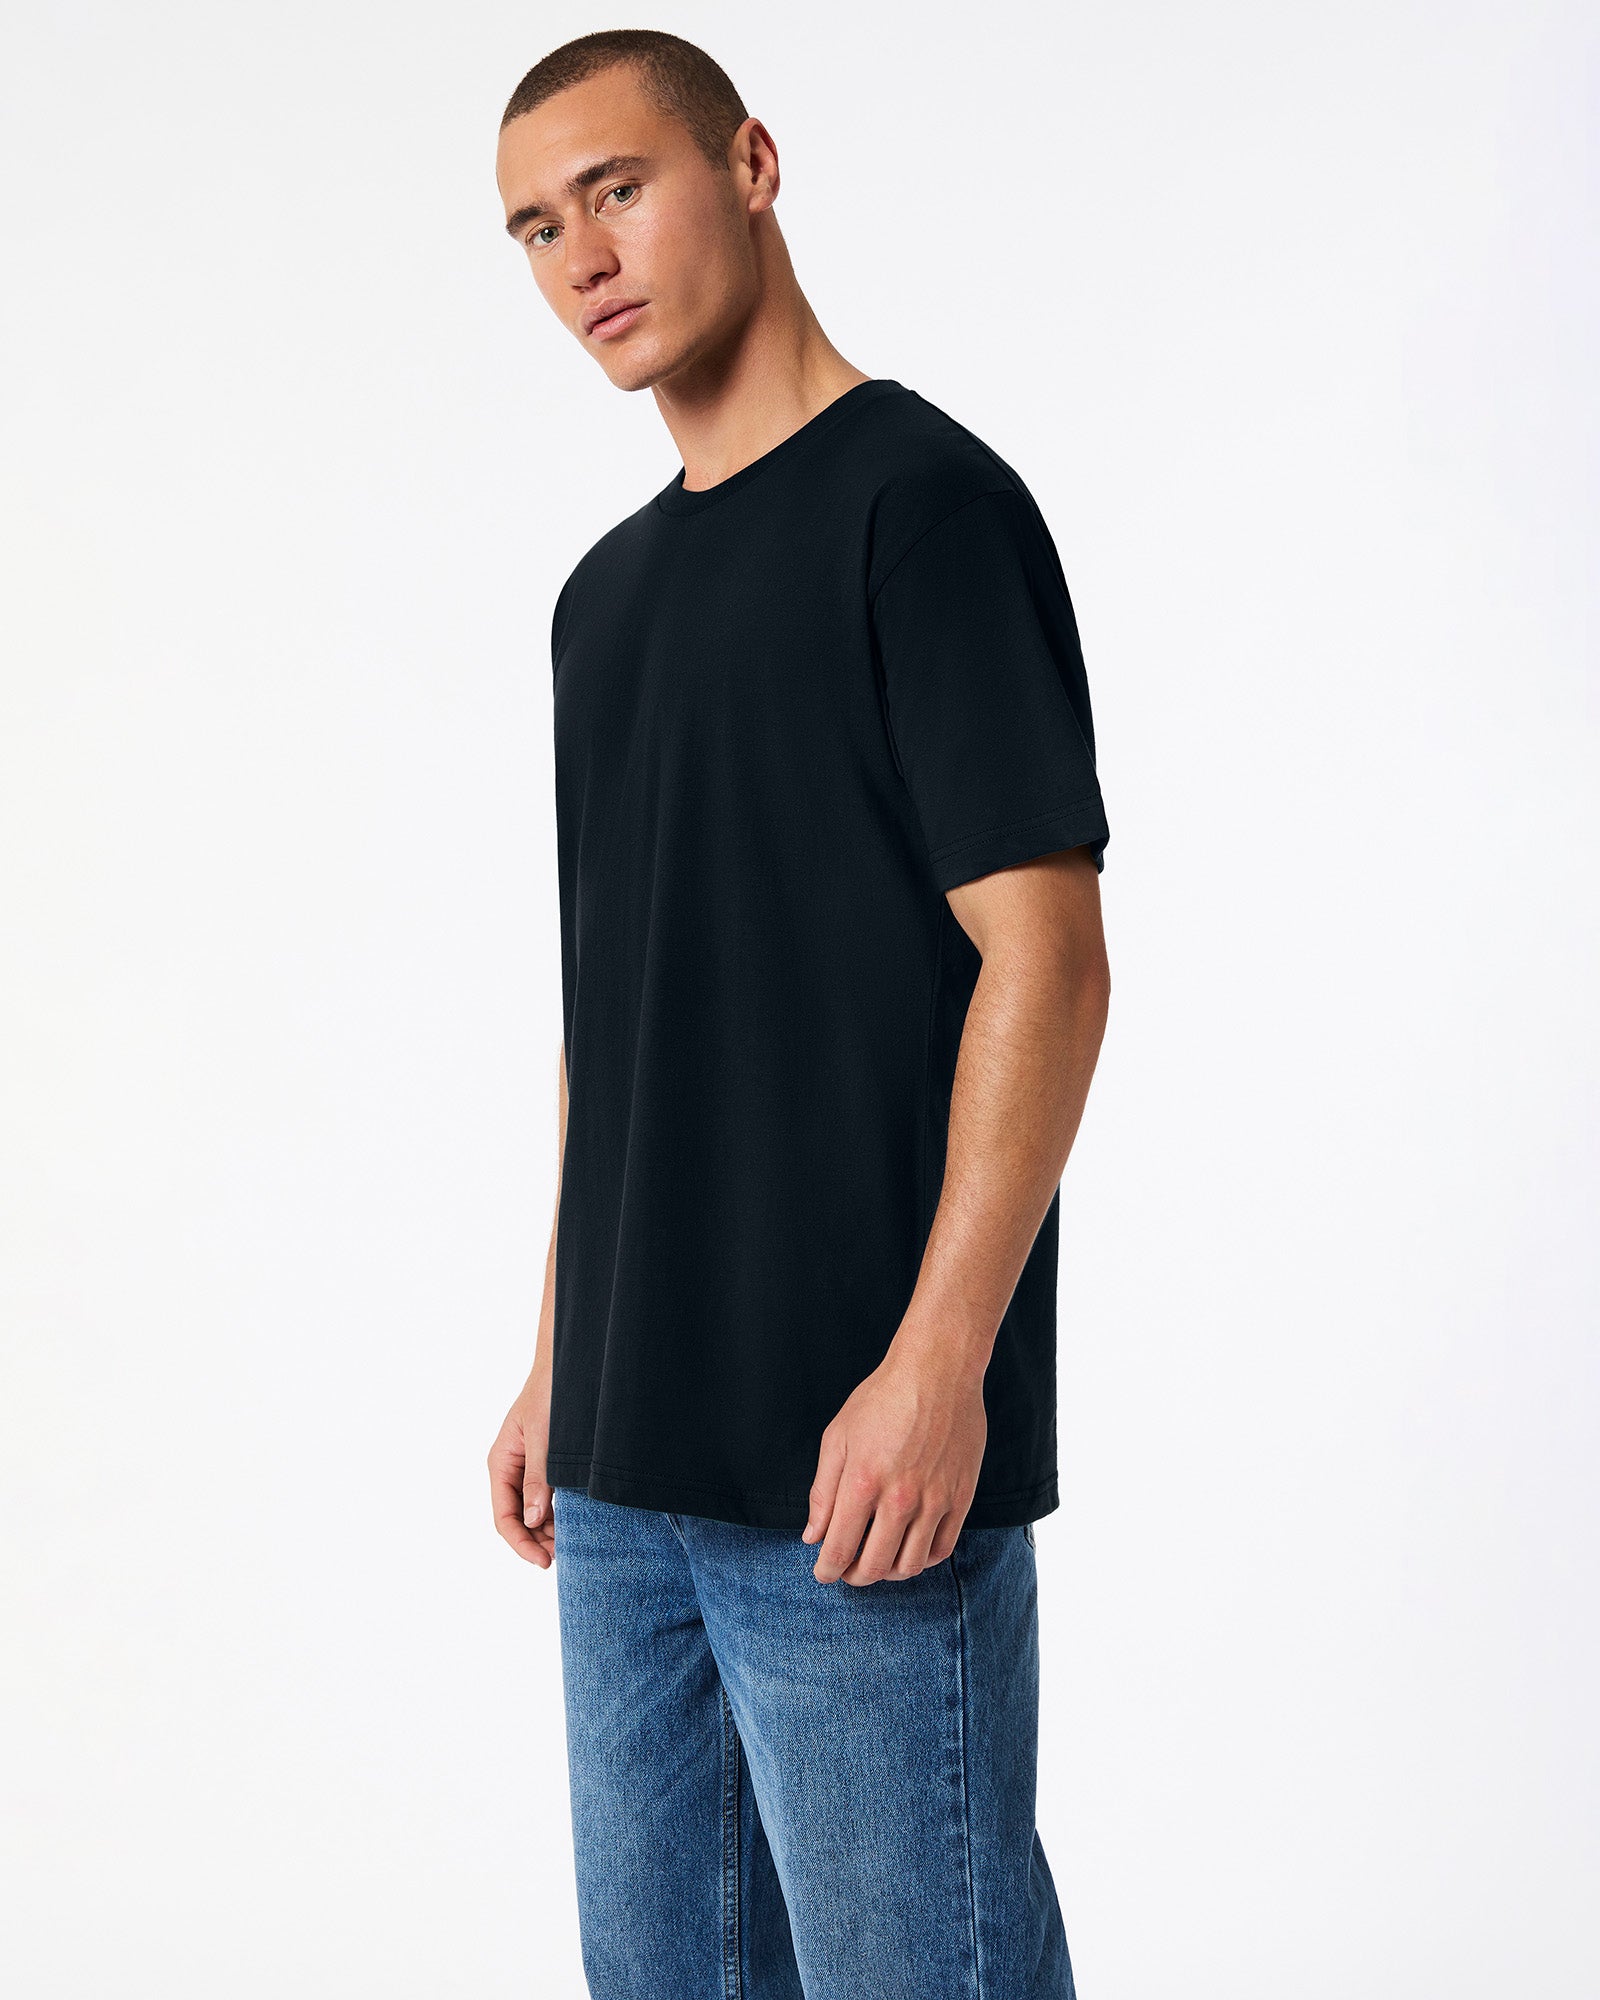 Fine Jersey Unisex Short Sleeve T-Shirt - Black